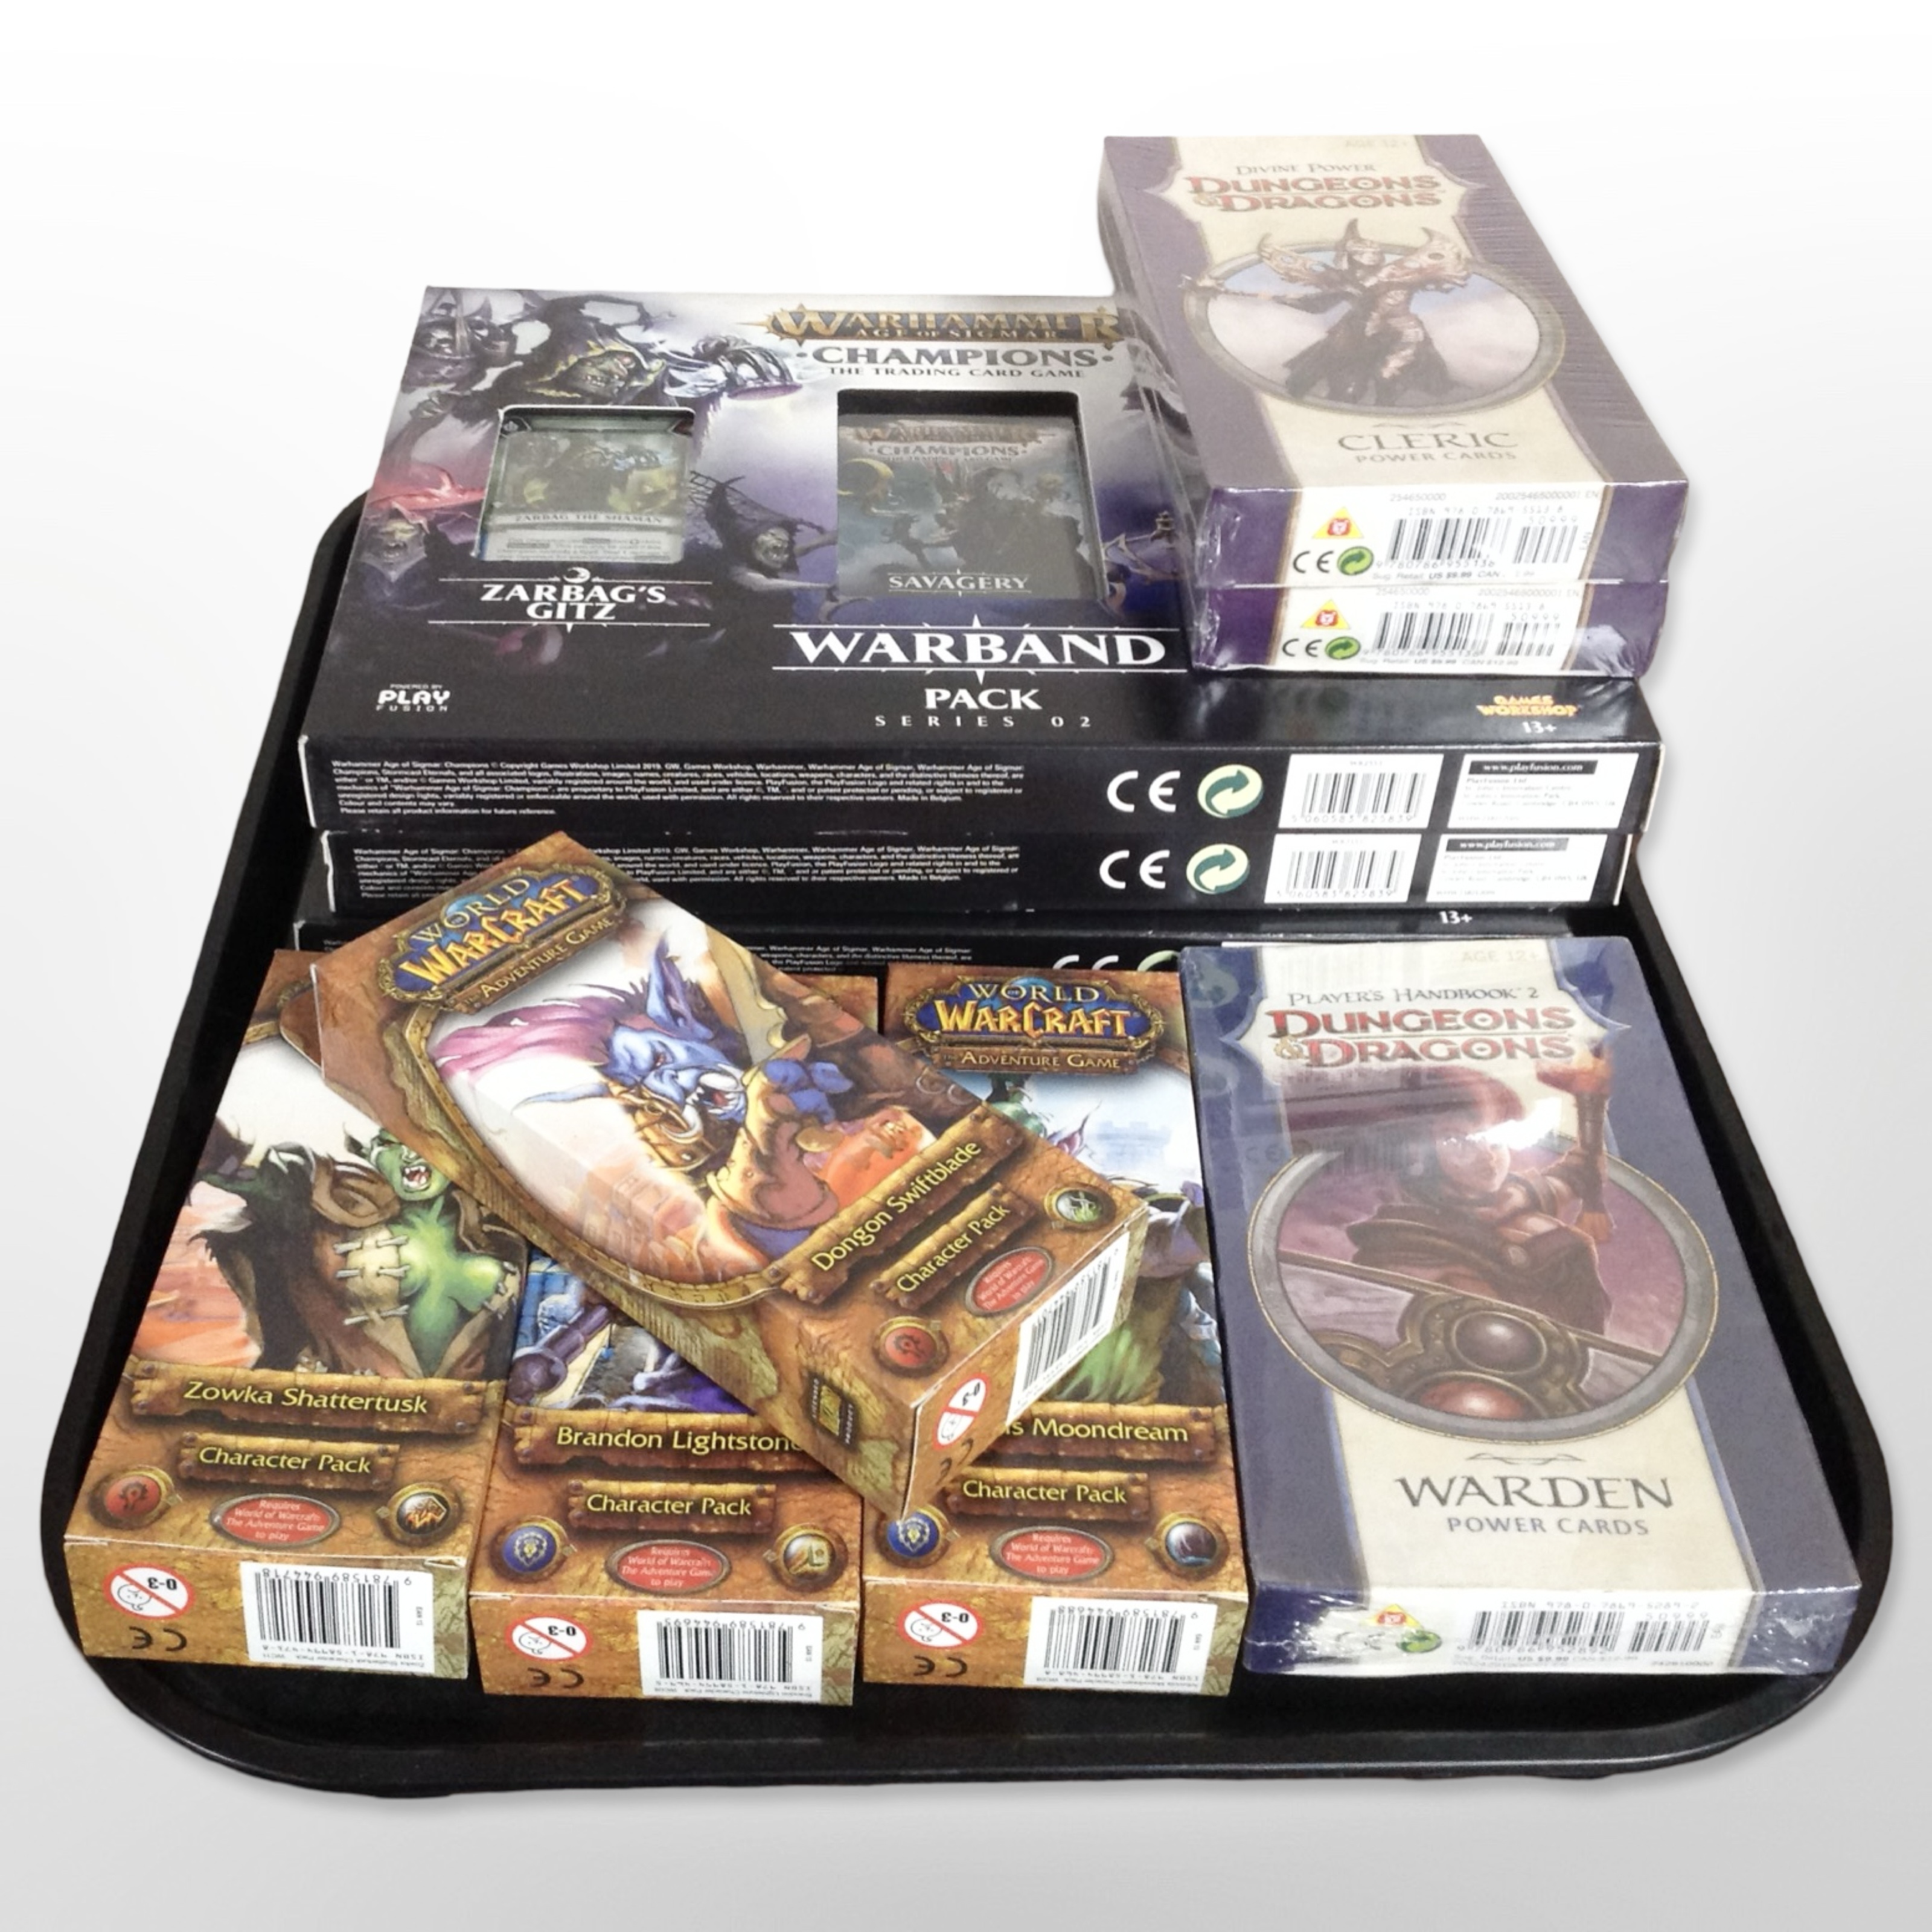 Three Warhammer Age of Sigmar Champions Trading Card Game packs,